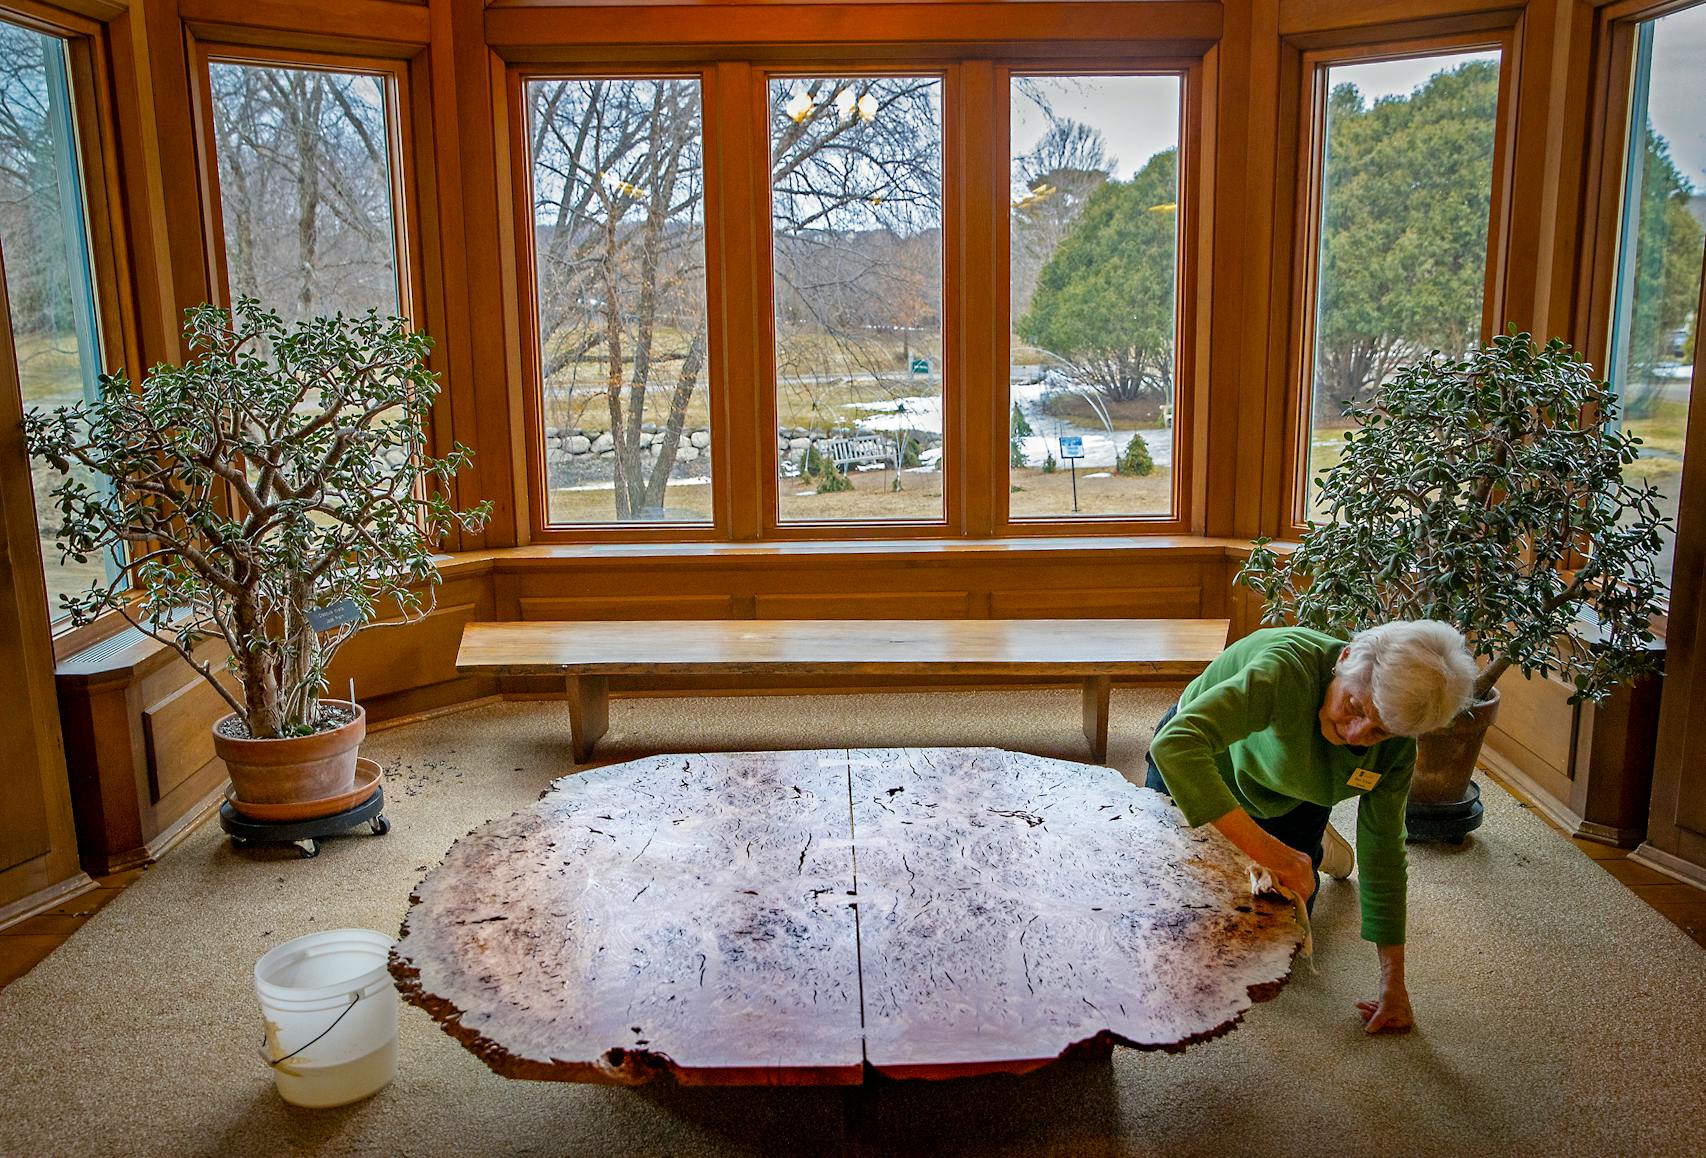 Arboretum volunteer Mary Klacan cleaned and re-oiled the oak burl table.